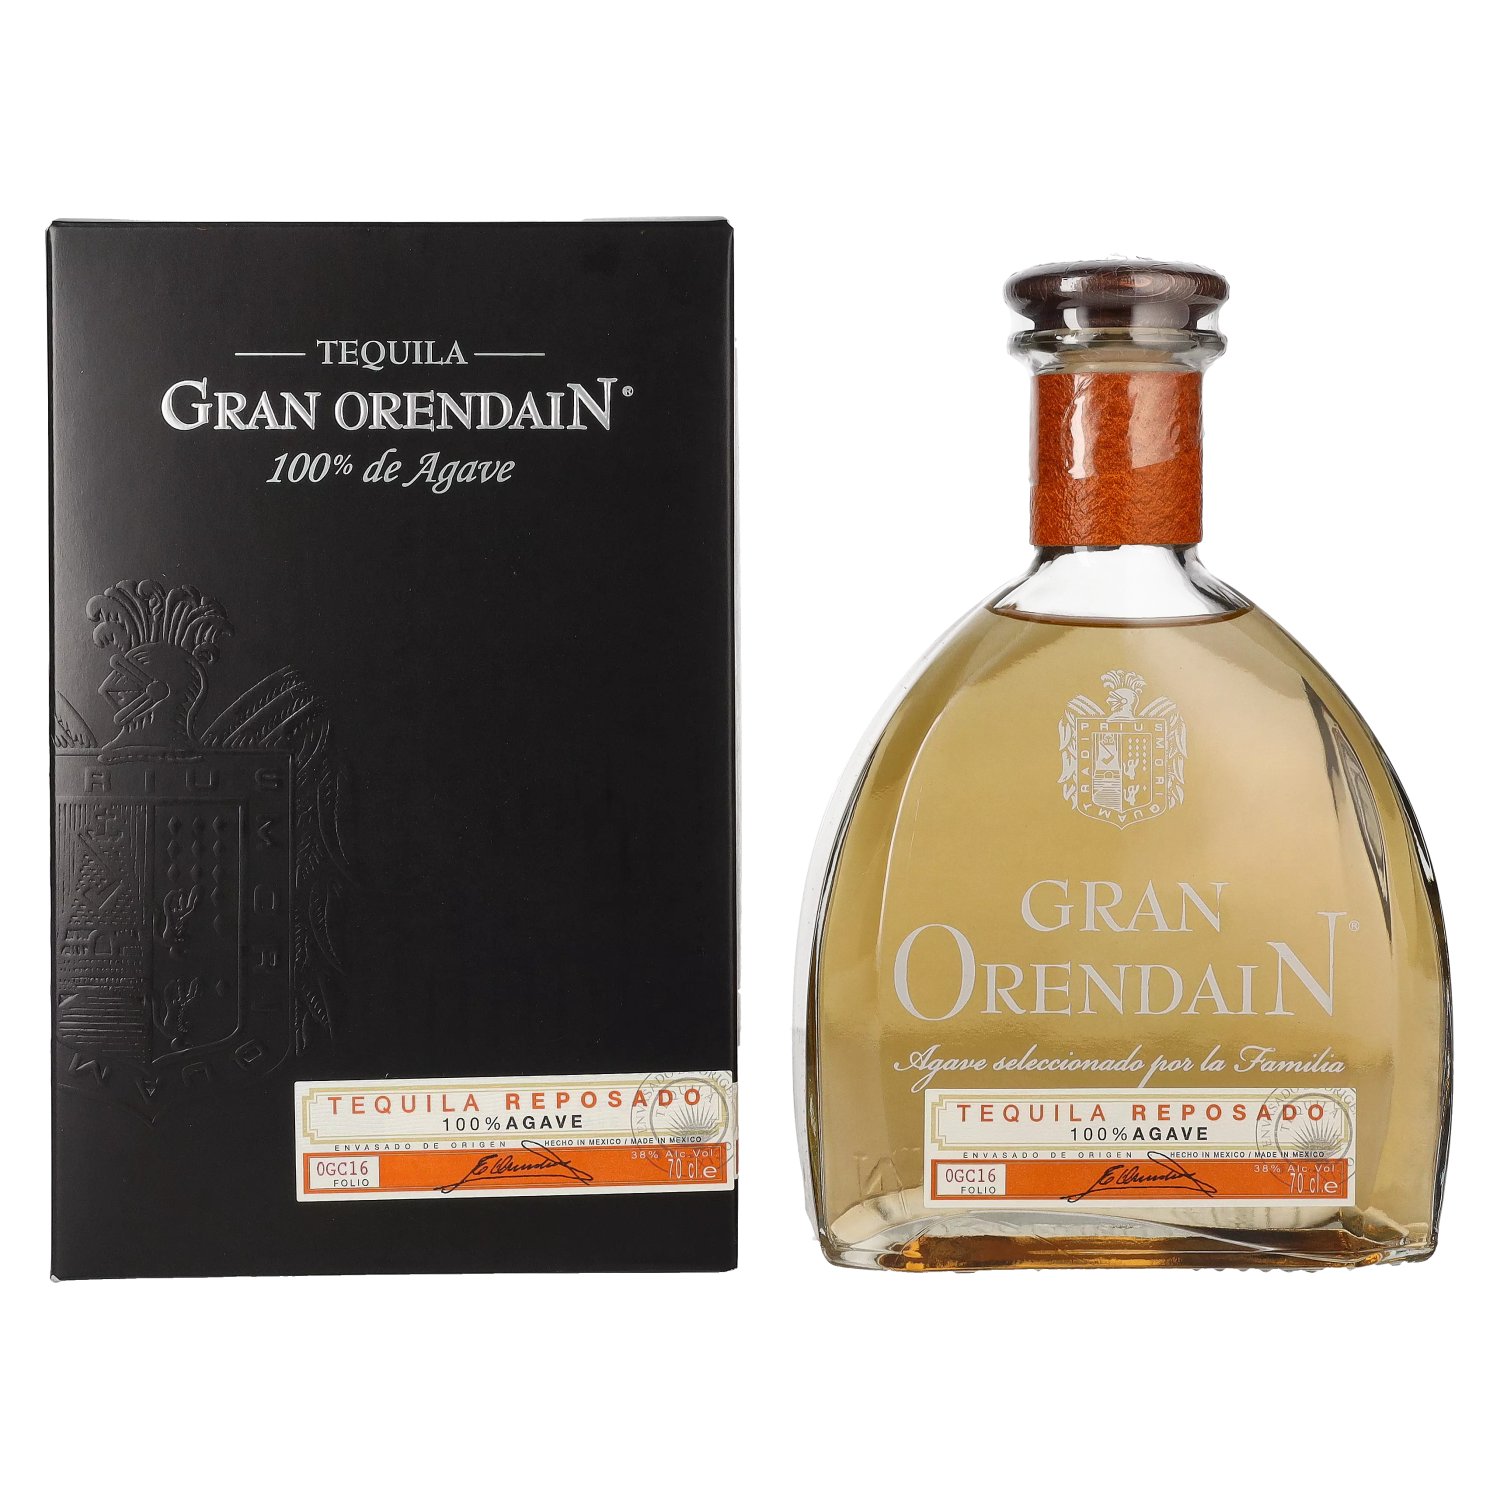 Gran Orendain Tequila REPOSADO 100% Vol. 0,7l in 38% Giftbox Agave